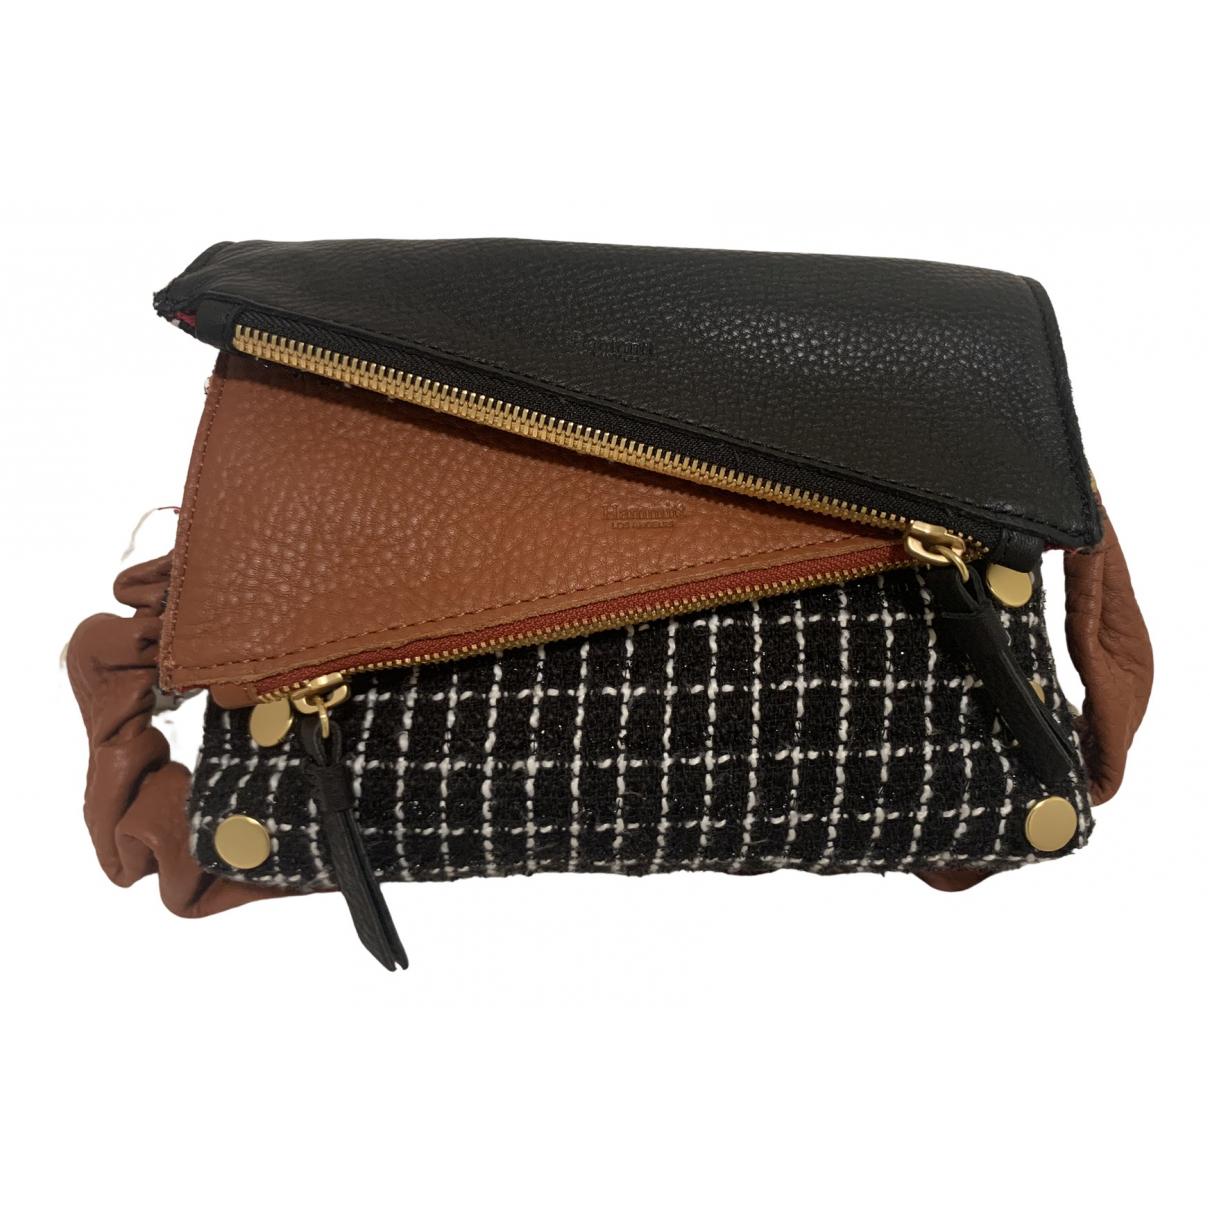 Leather handbag Hammitt